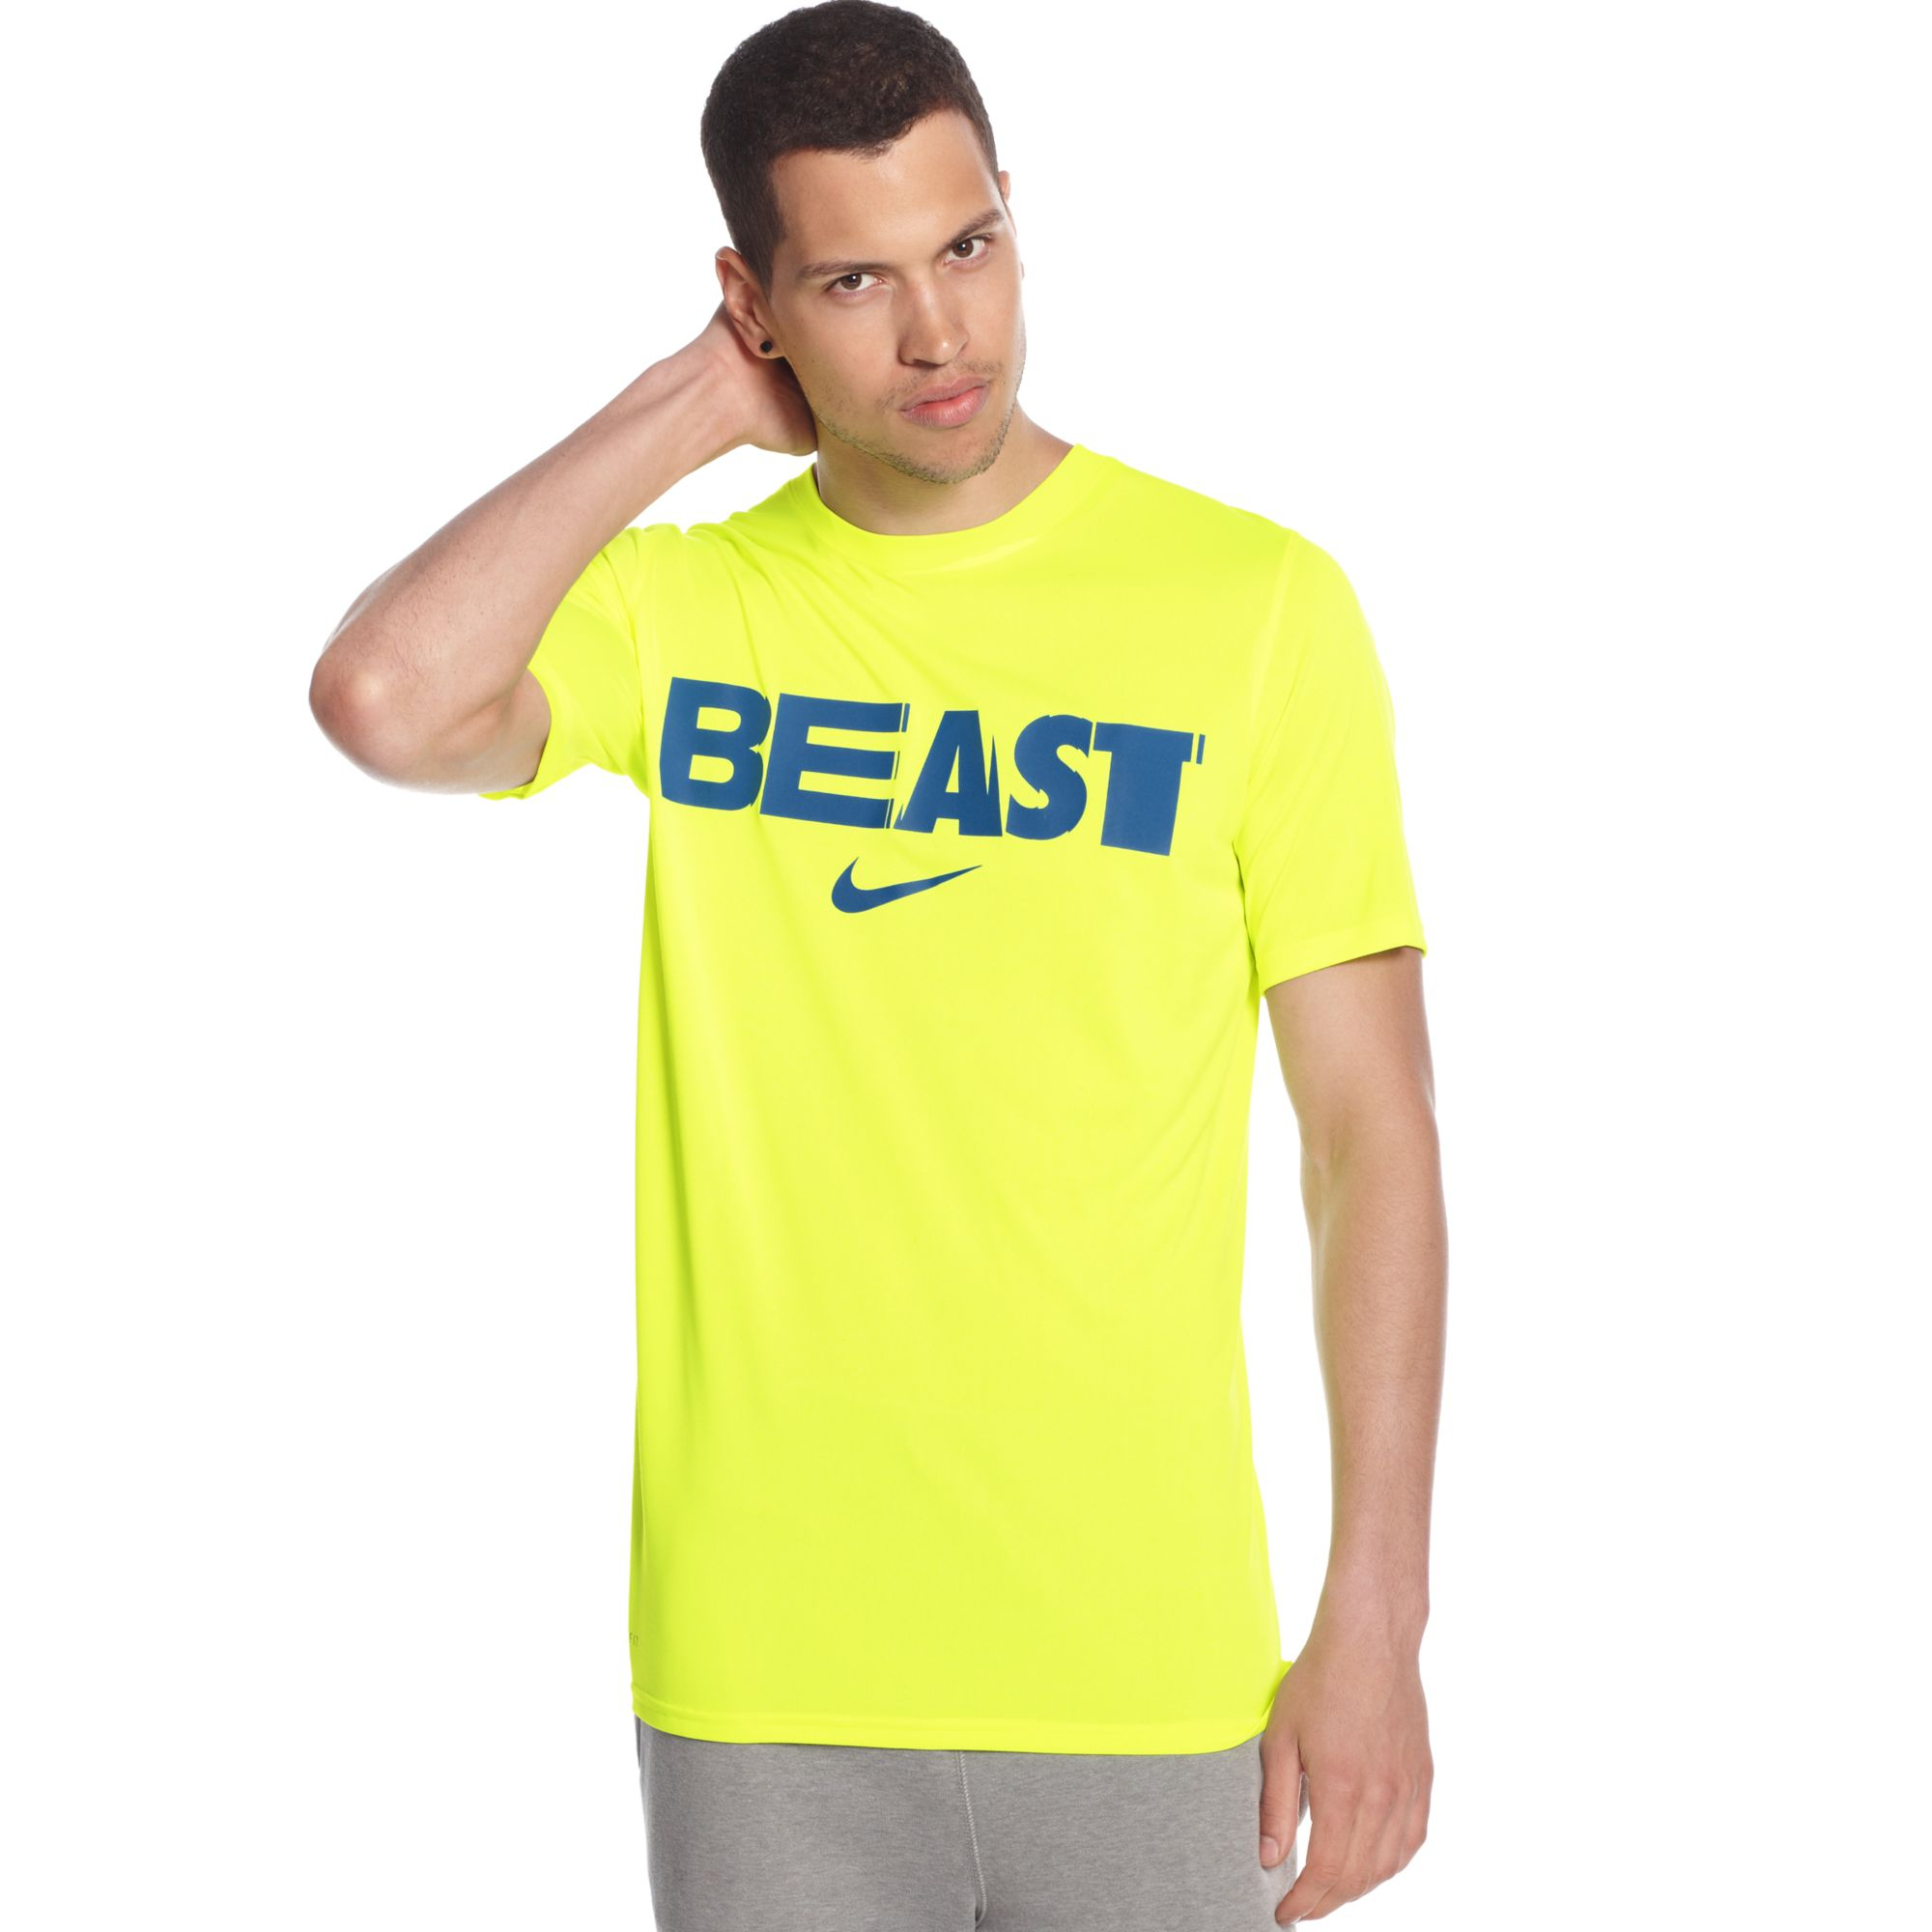 nike beast mode shirt Off 58% - www.sbs-turkey.com